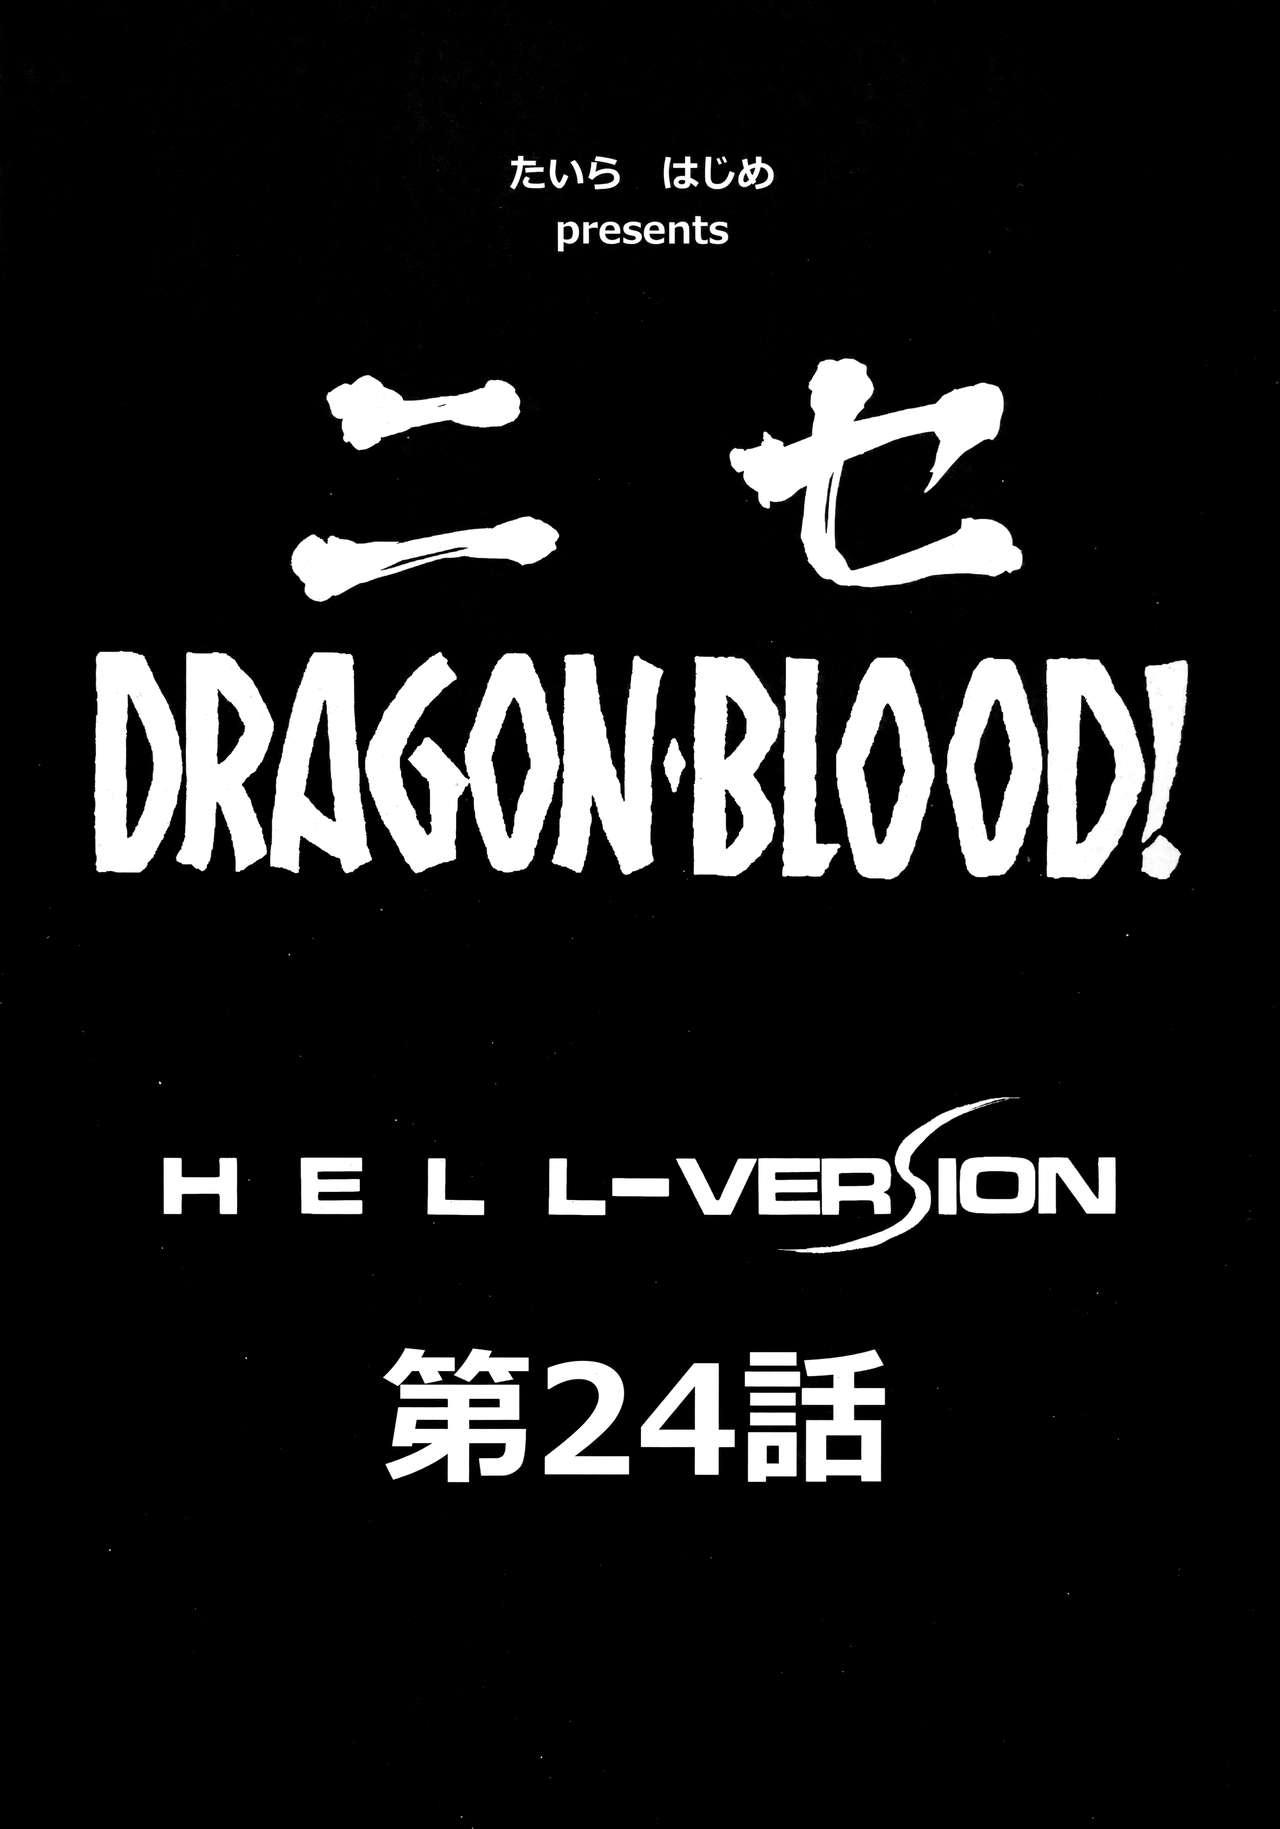 Nise Dragon Blood! 24. 7